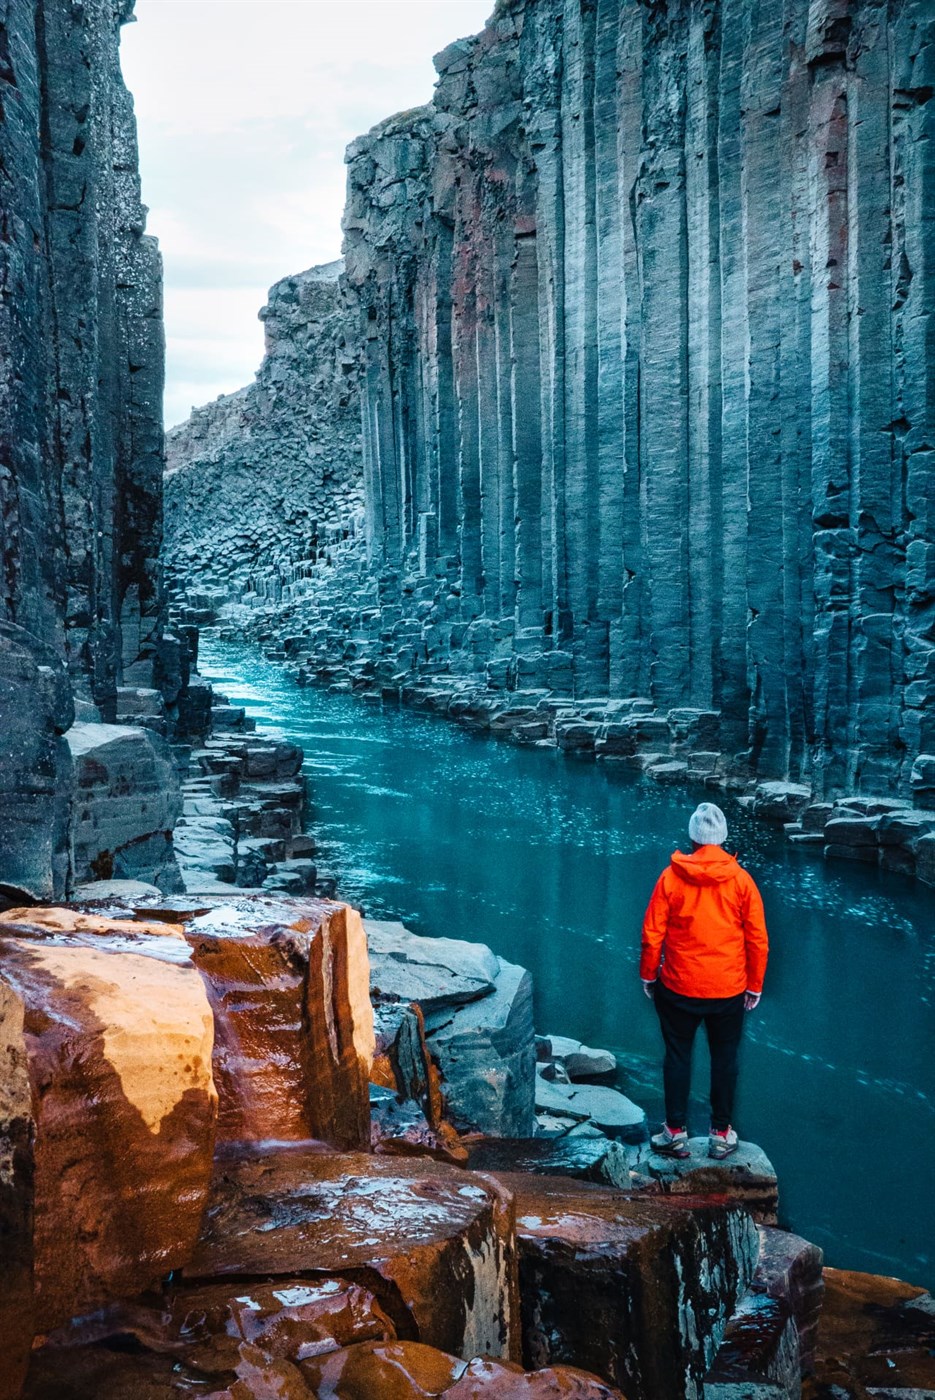 Stuðlagil Canyon in Iceland